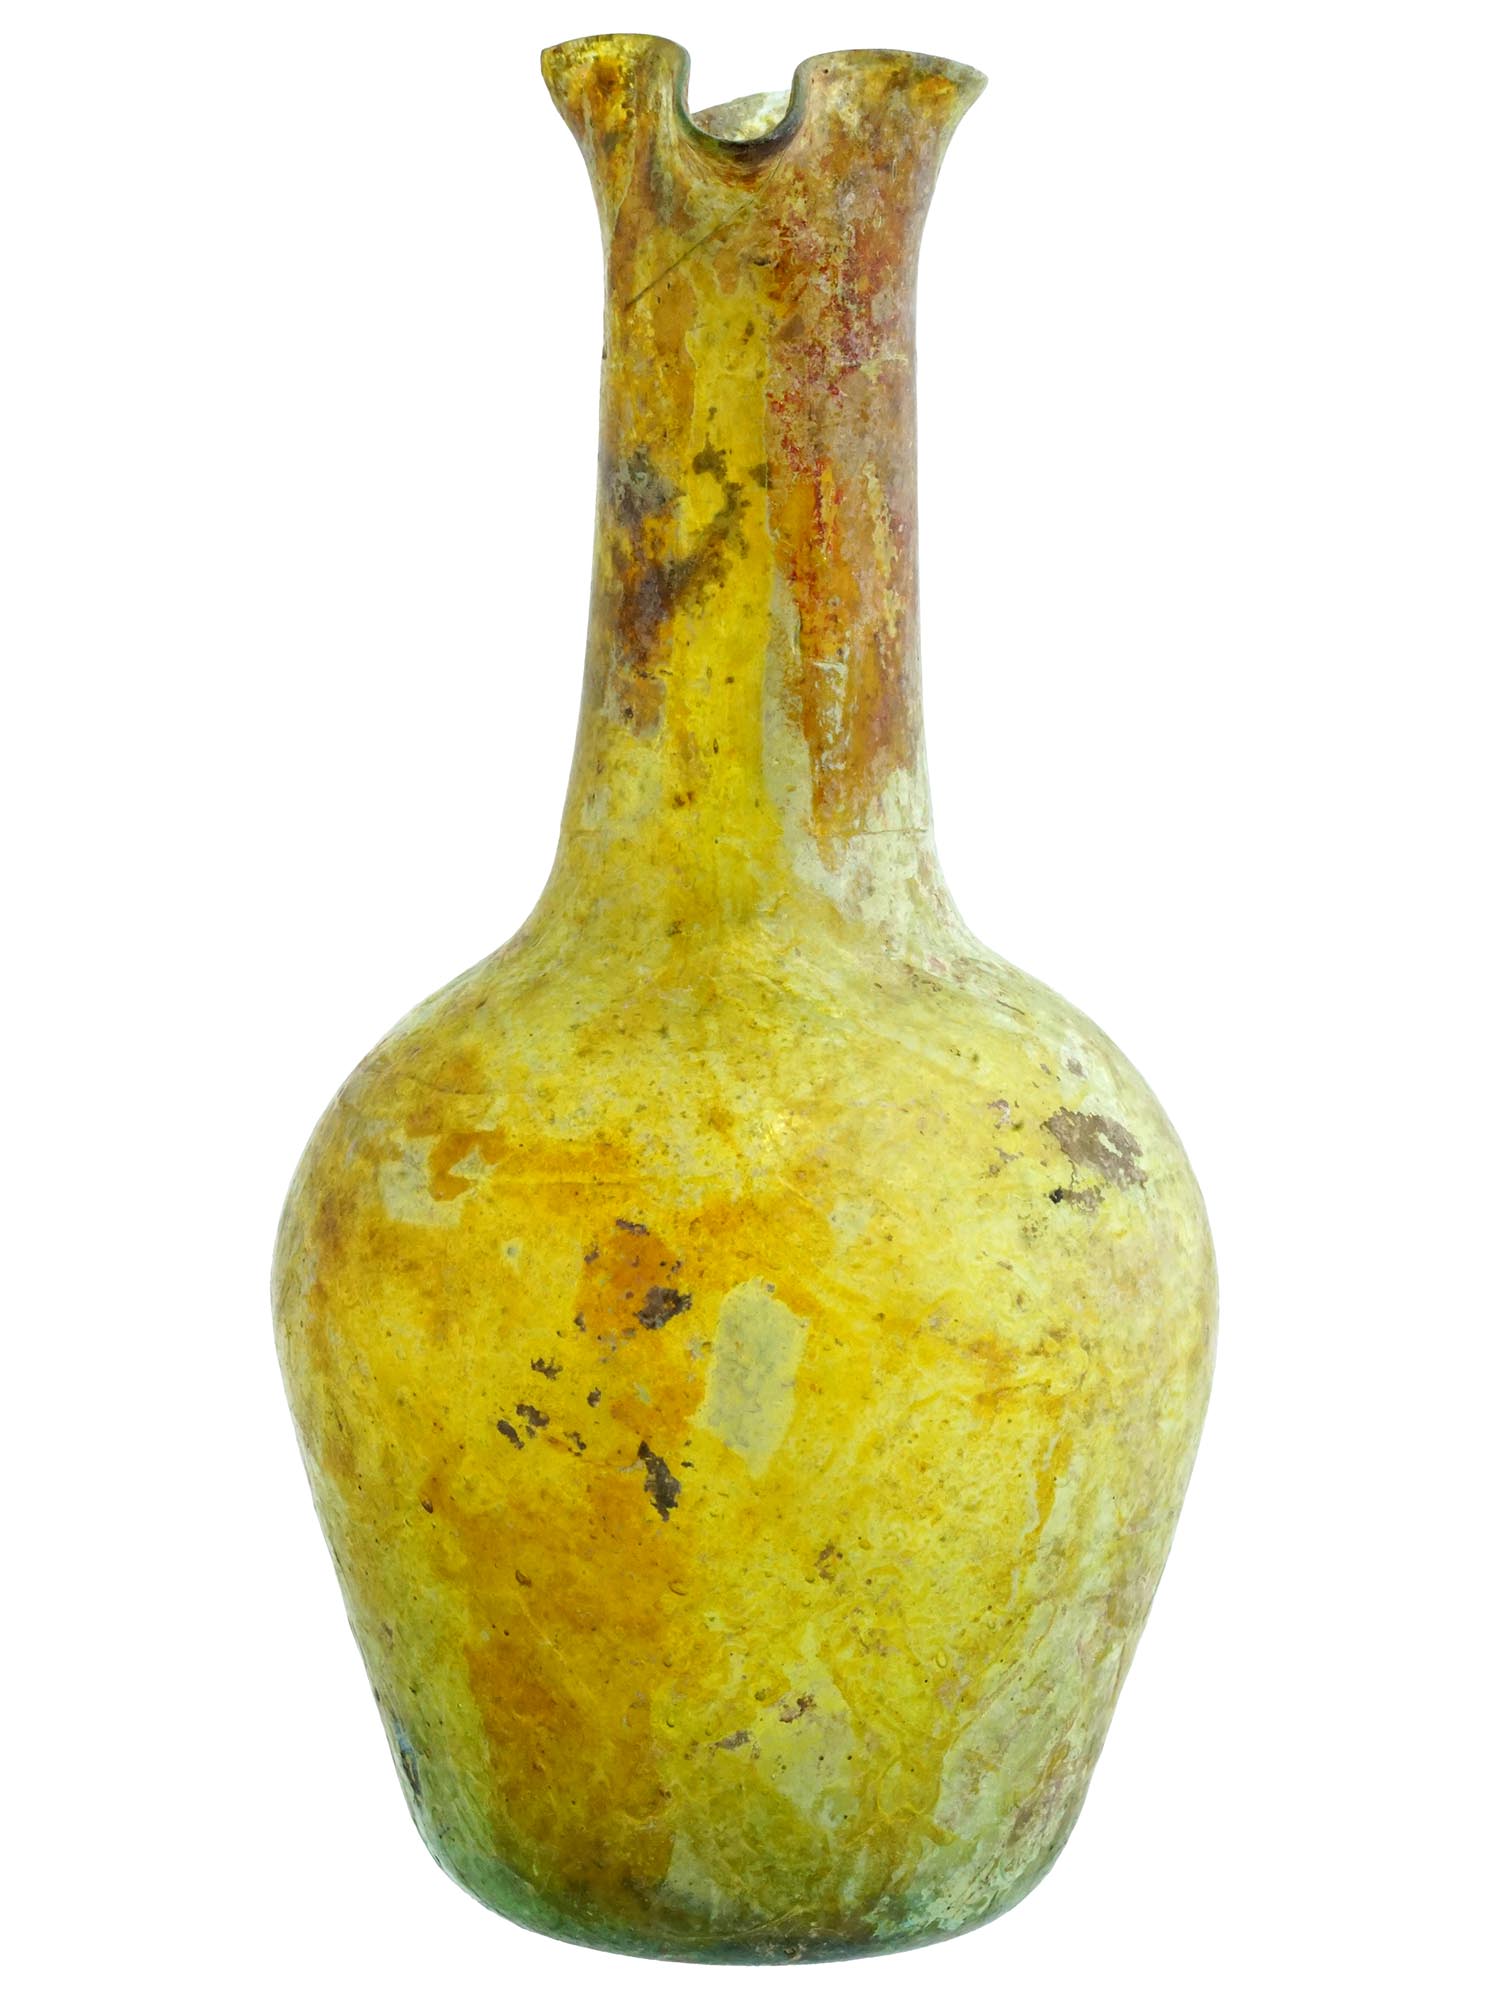 ANCIENT ROMAN GLASS PERFUME BOTTLE 1ST CENTURY BC PIC-3